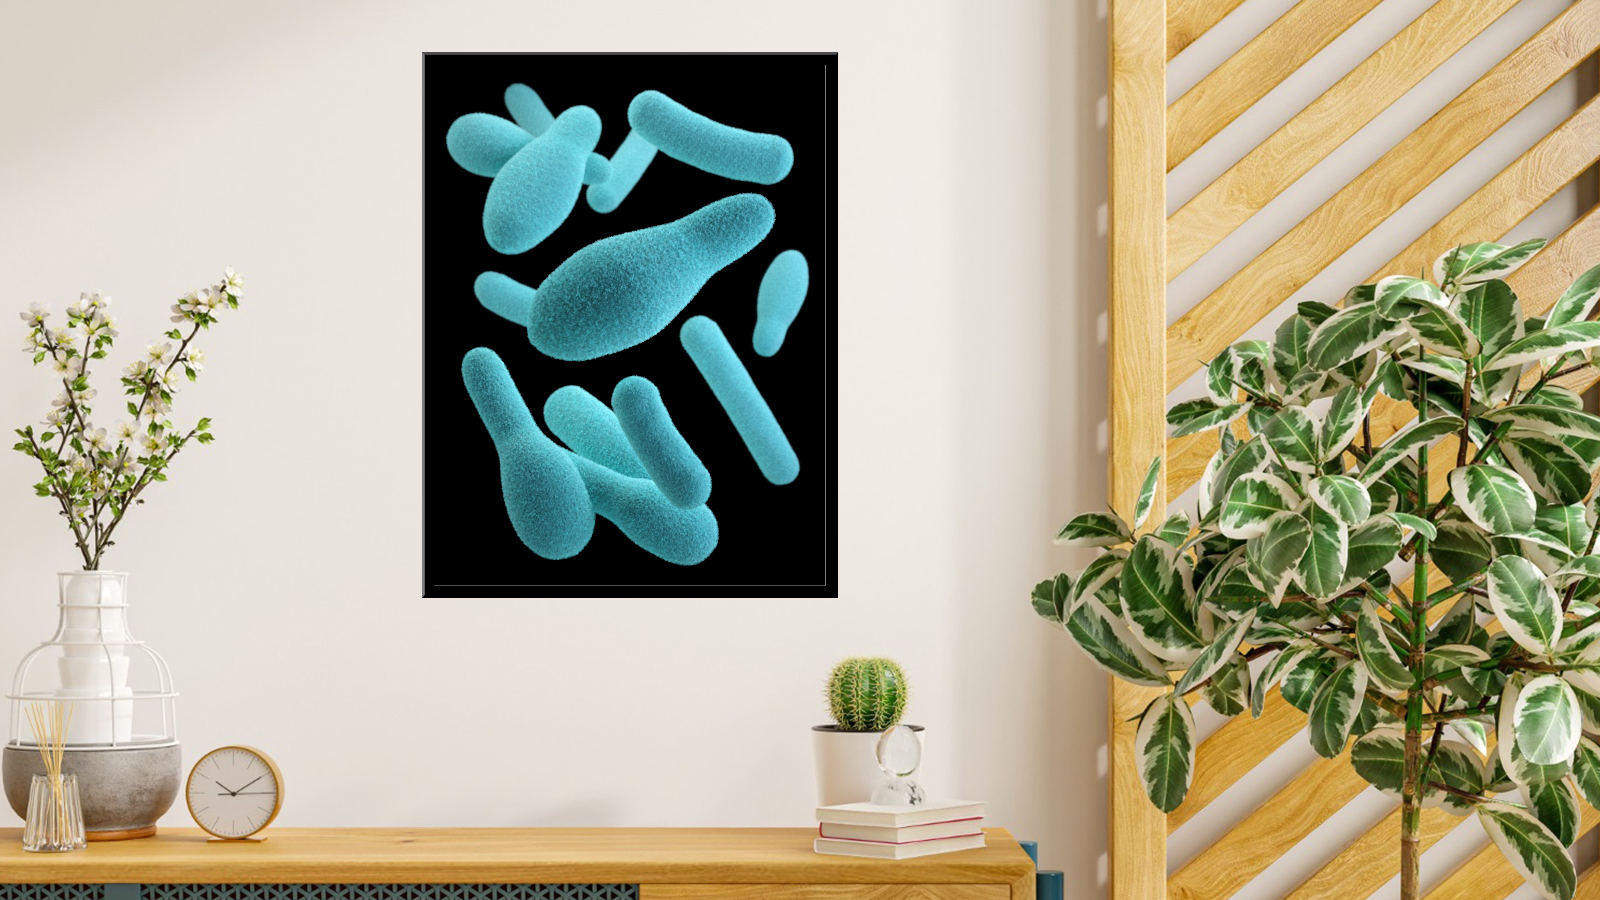 Club-shaped bacteria